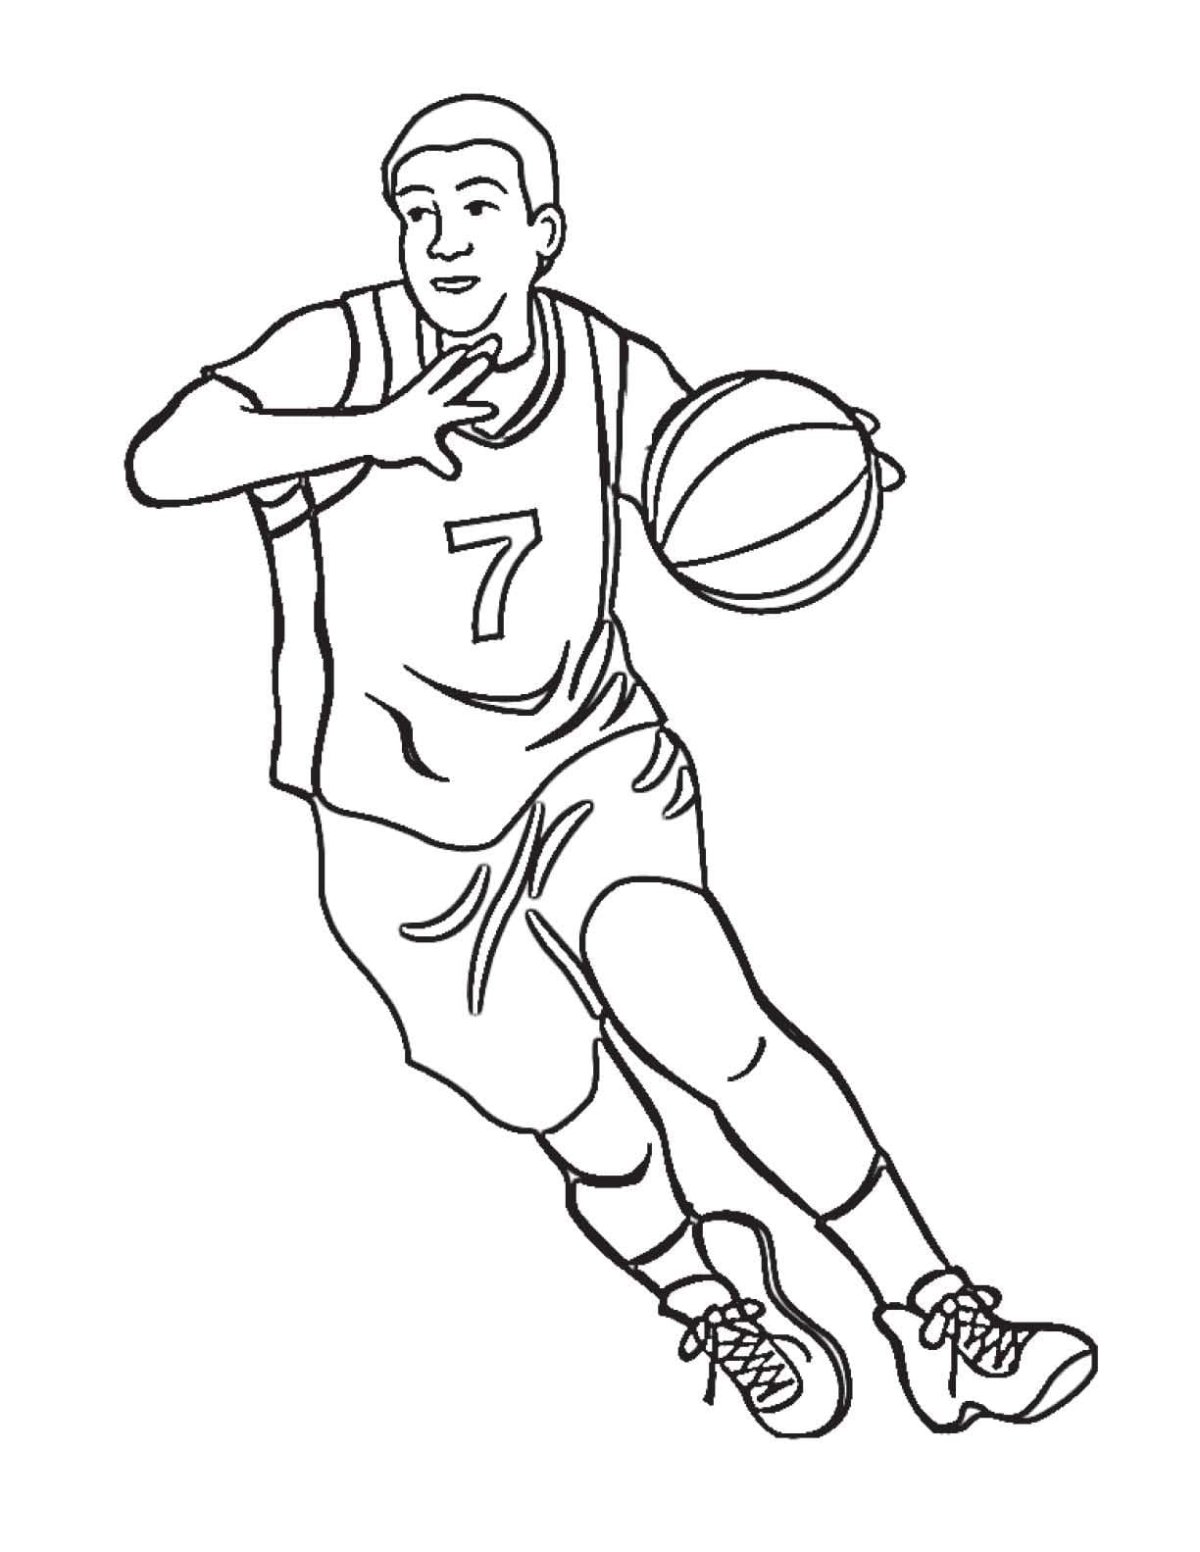 Как нарисовать баскетболиста карандашом поэтапно ✏